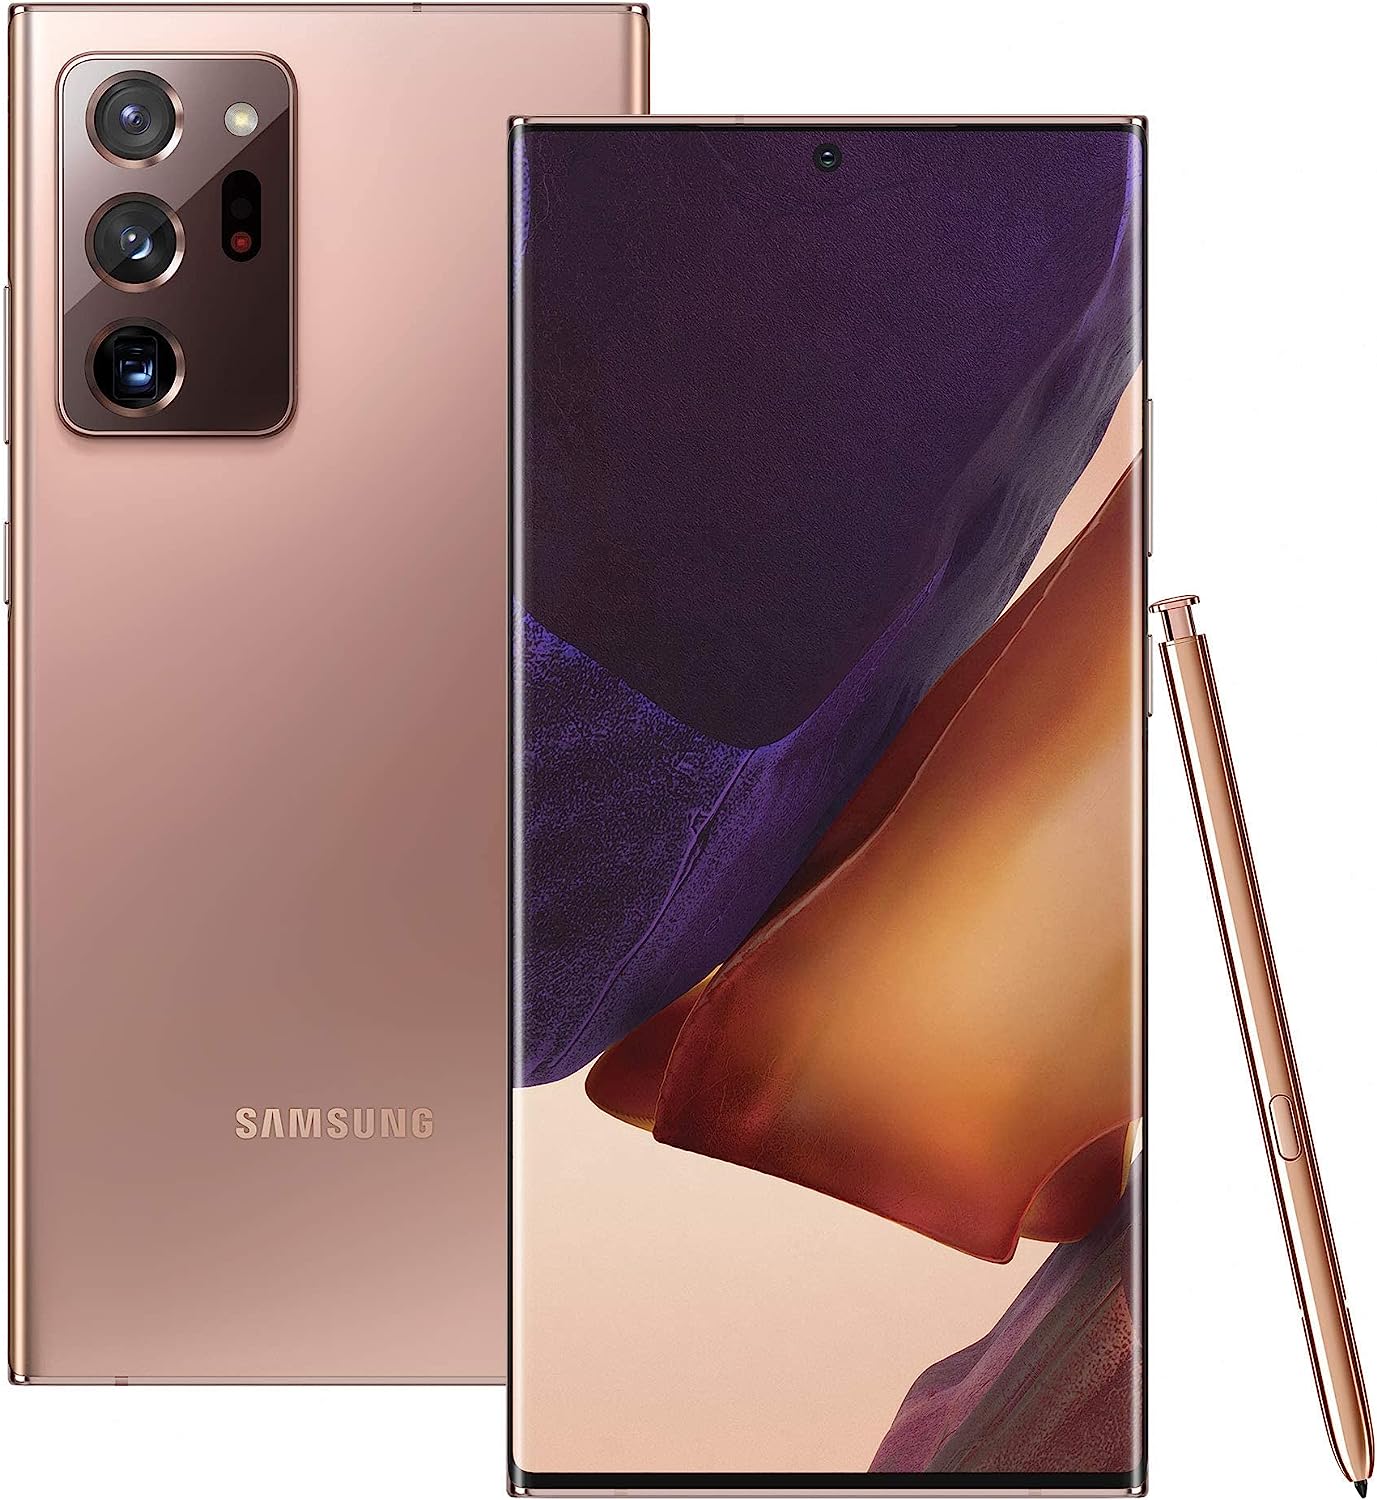 Samsung galaxy note 20 ultra 5g 256gb - mystic bronze - unlocked (renewed)